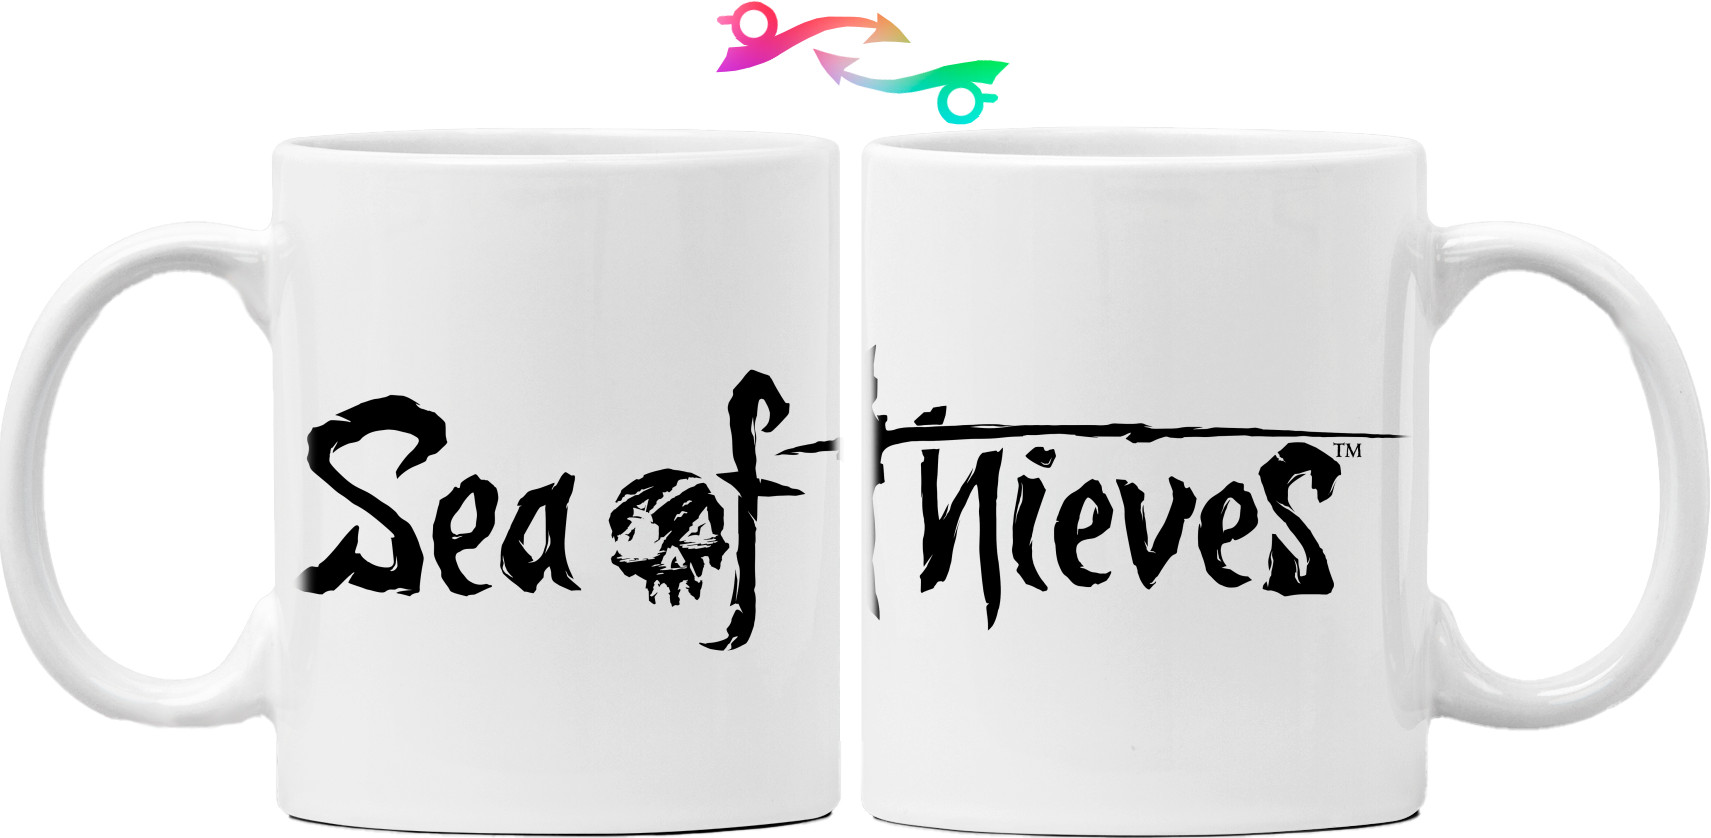 Sea of Thieves logo 3